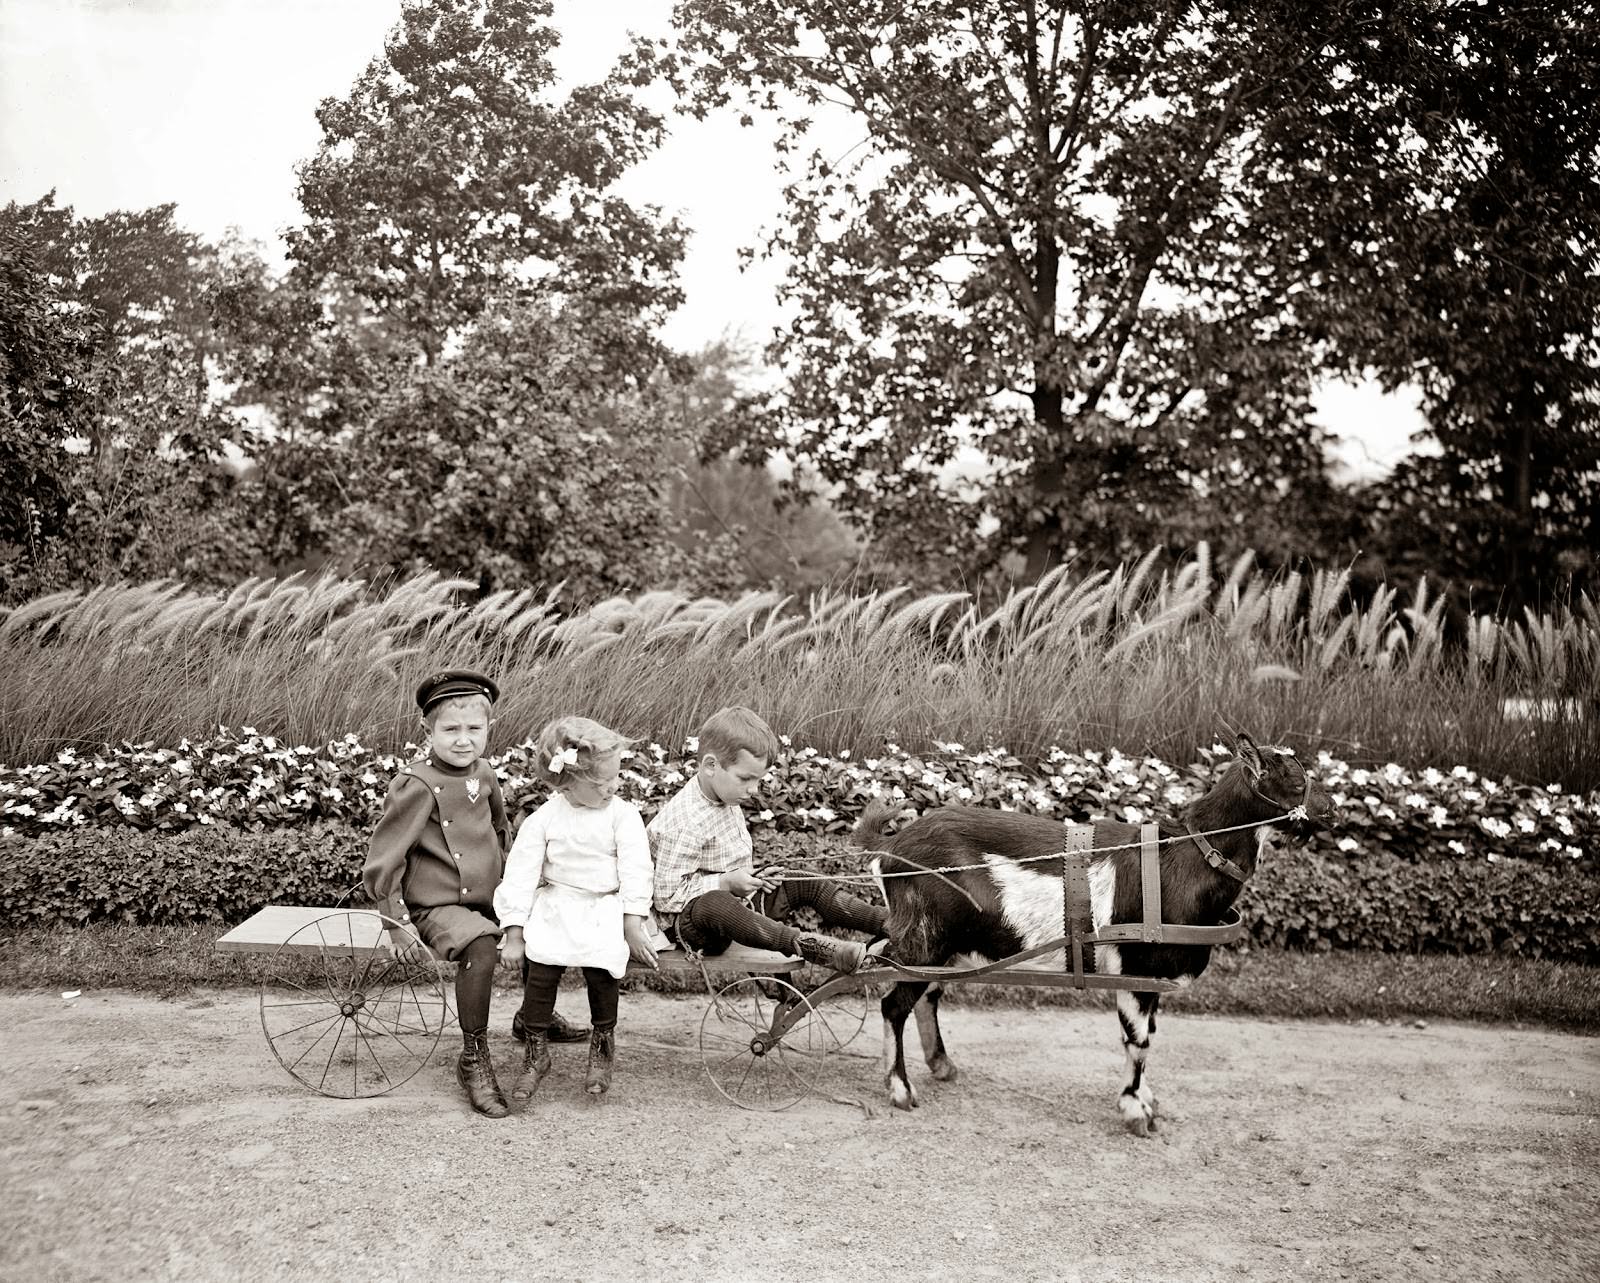 Goat wagon, 1910